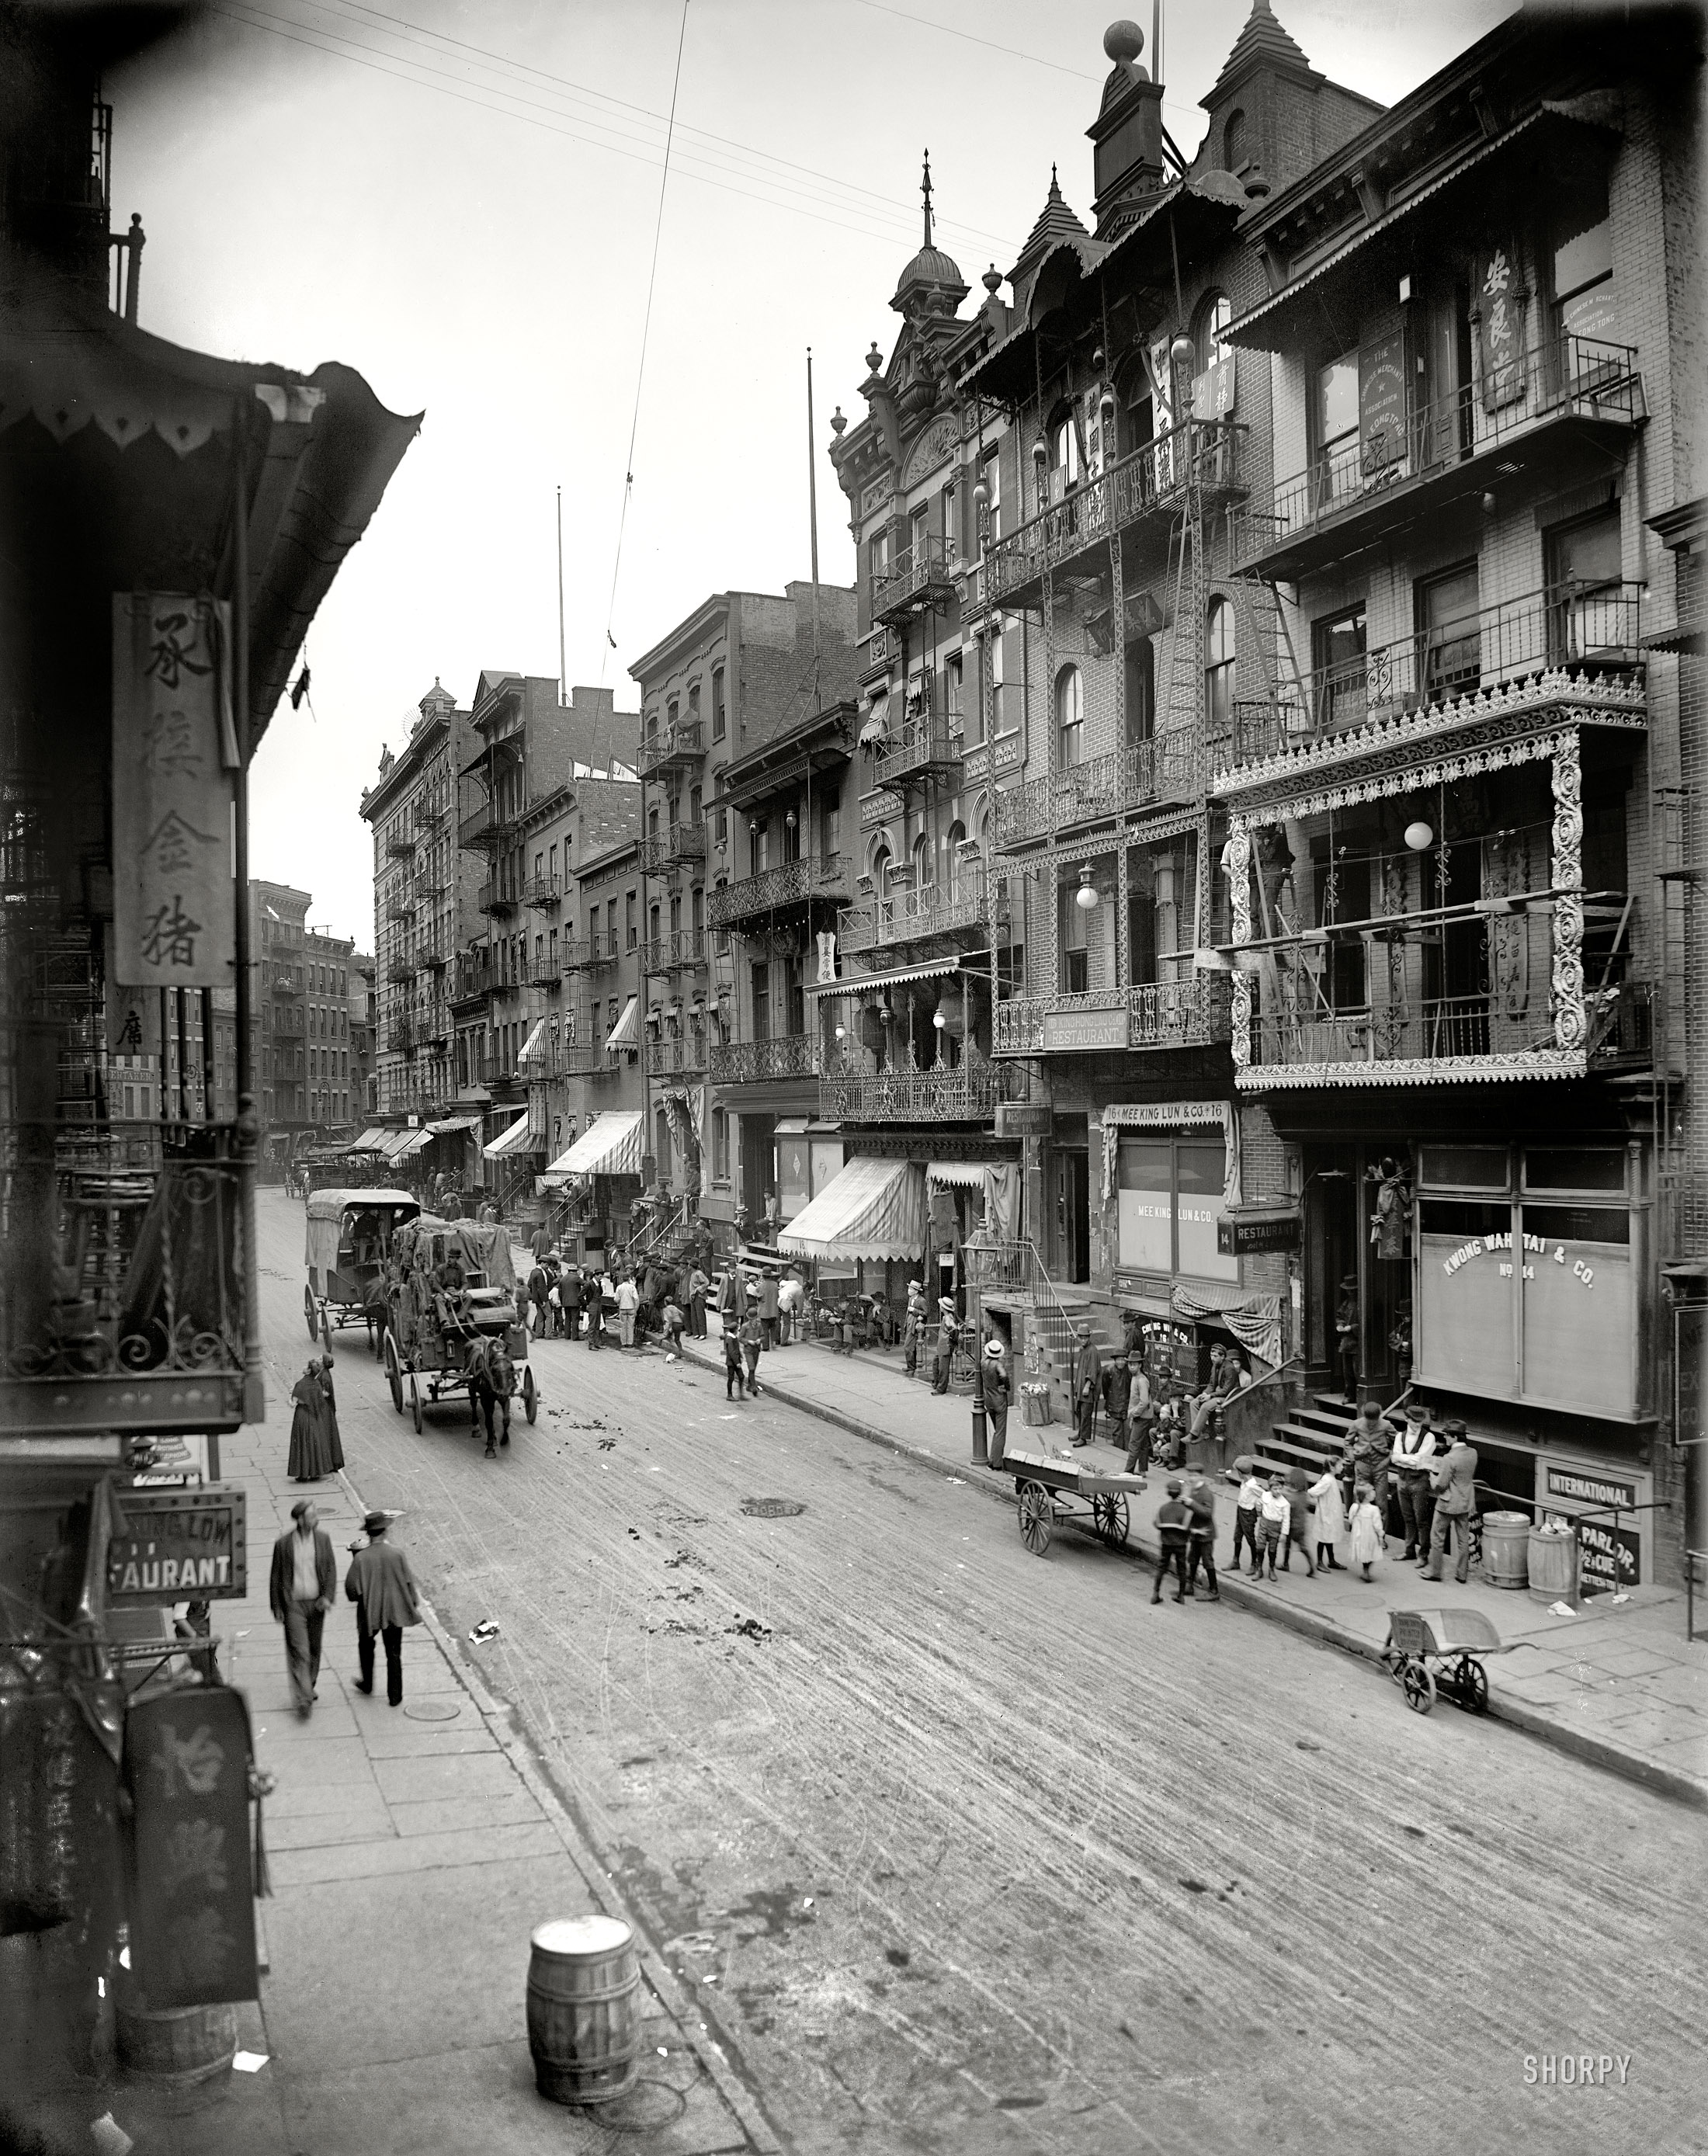 New York circa 1900. "Chinatown -- Mott Street." 8x10 inch dry plate glass negative, Detroit Publishing Company. View full size.